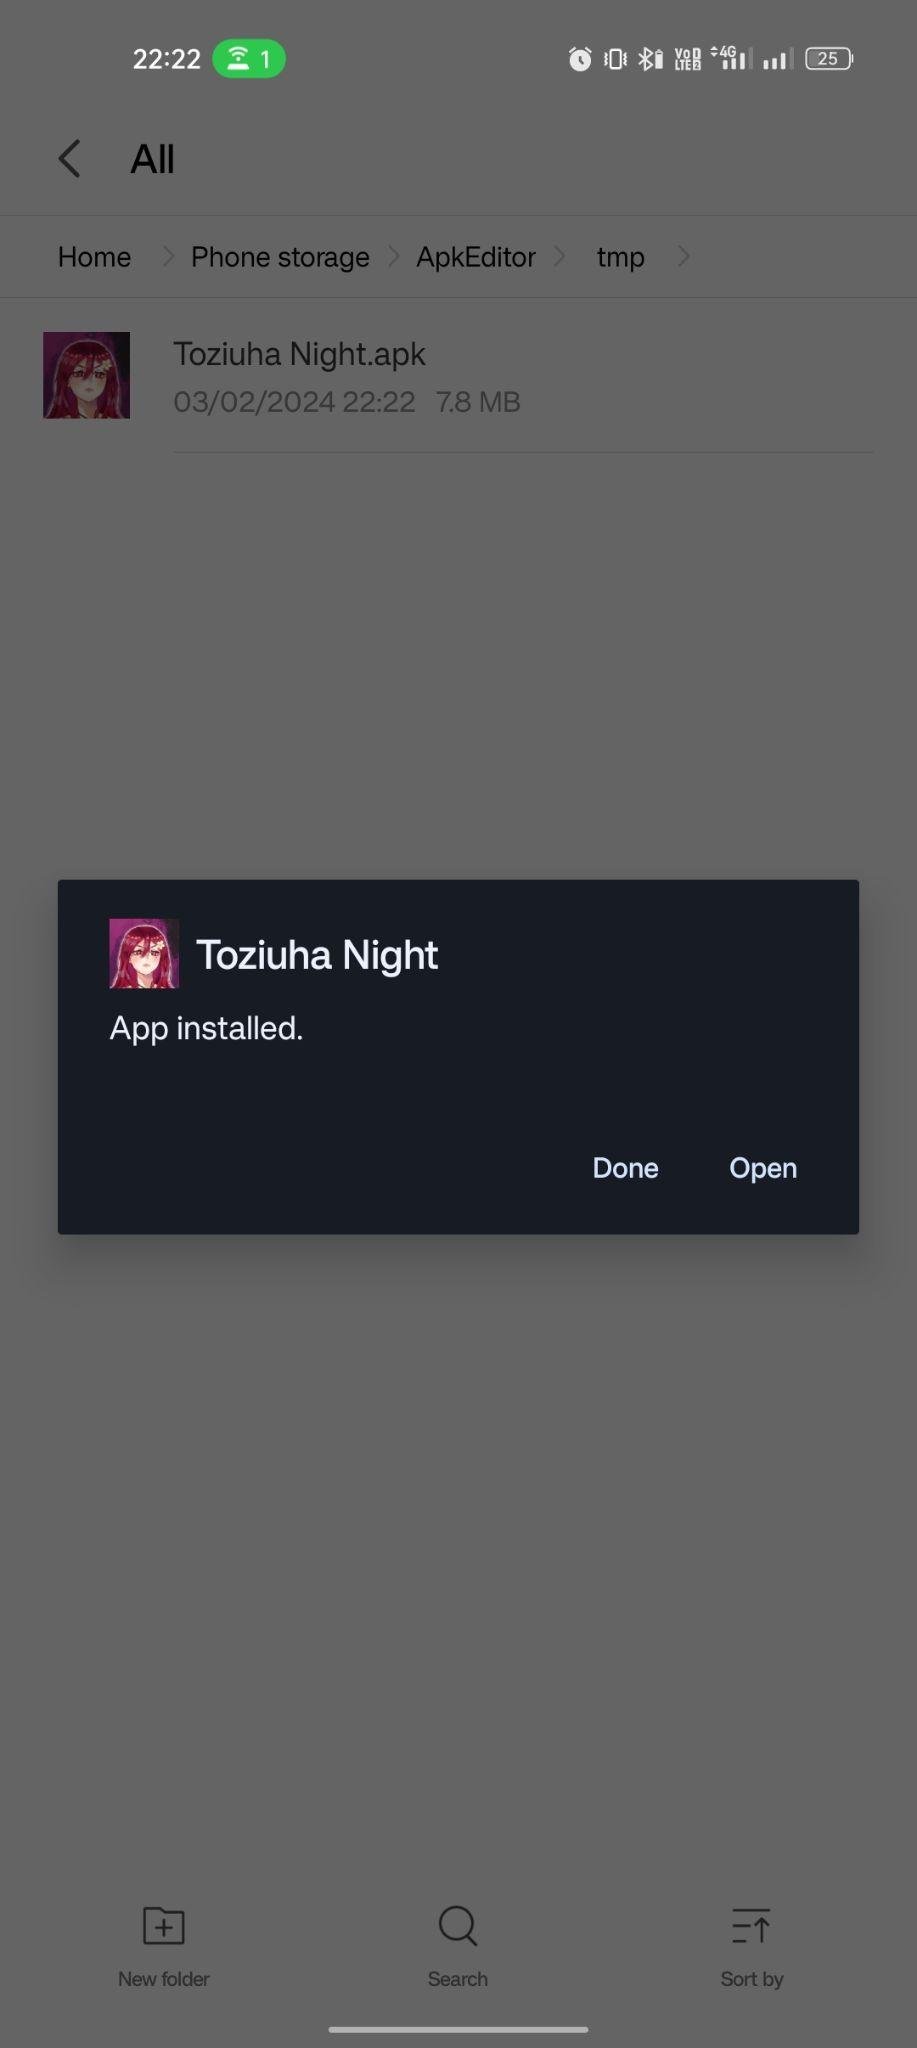 Toziuha Night apk installed